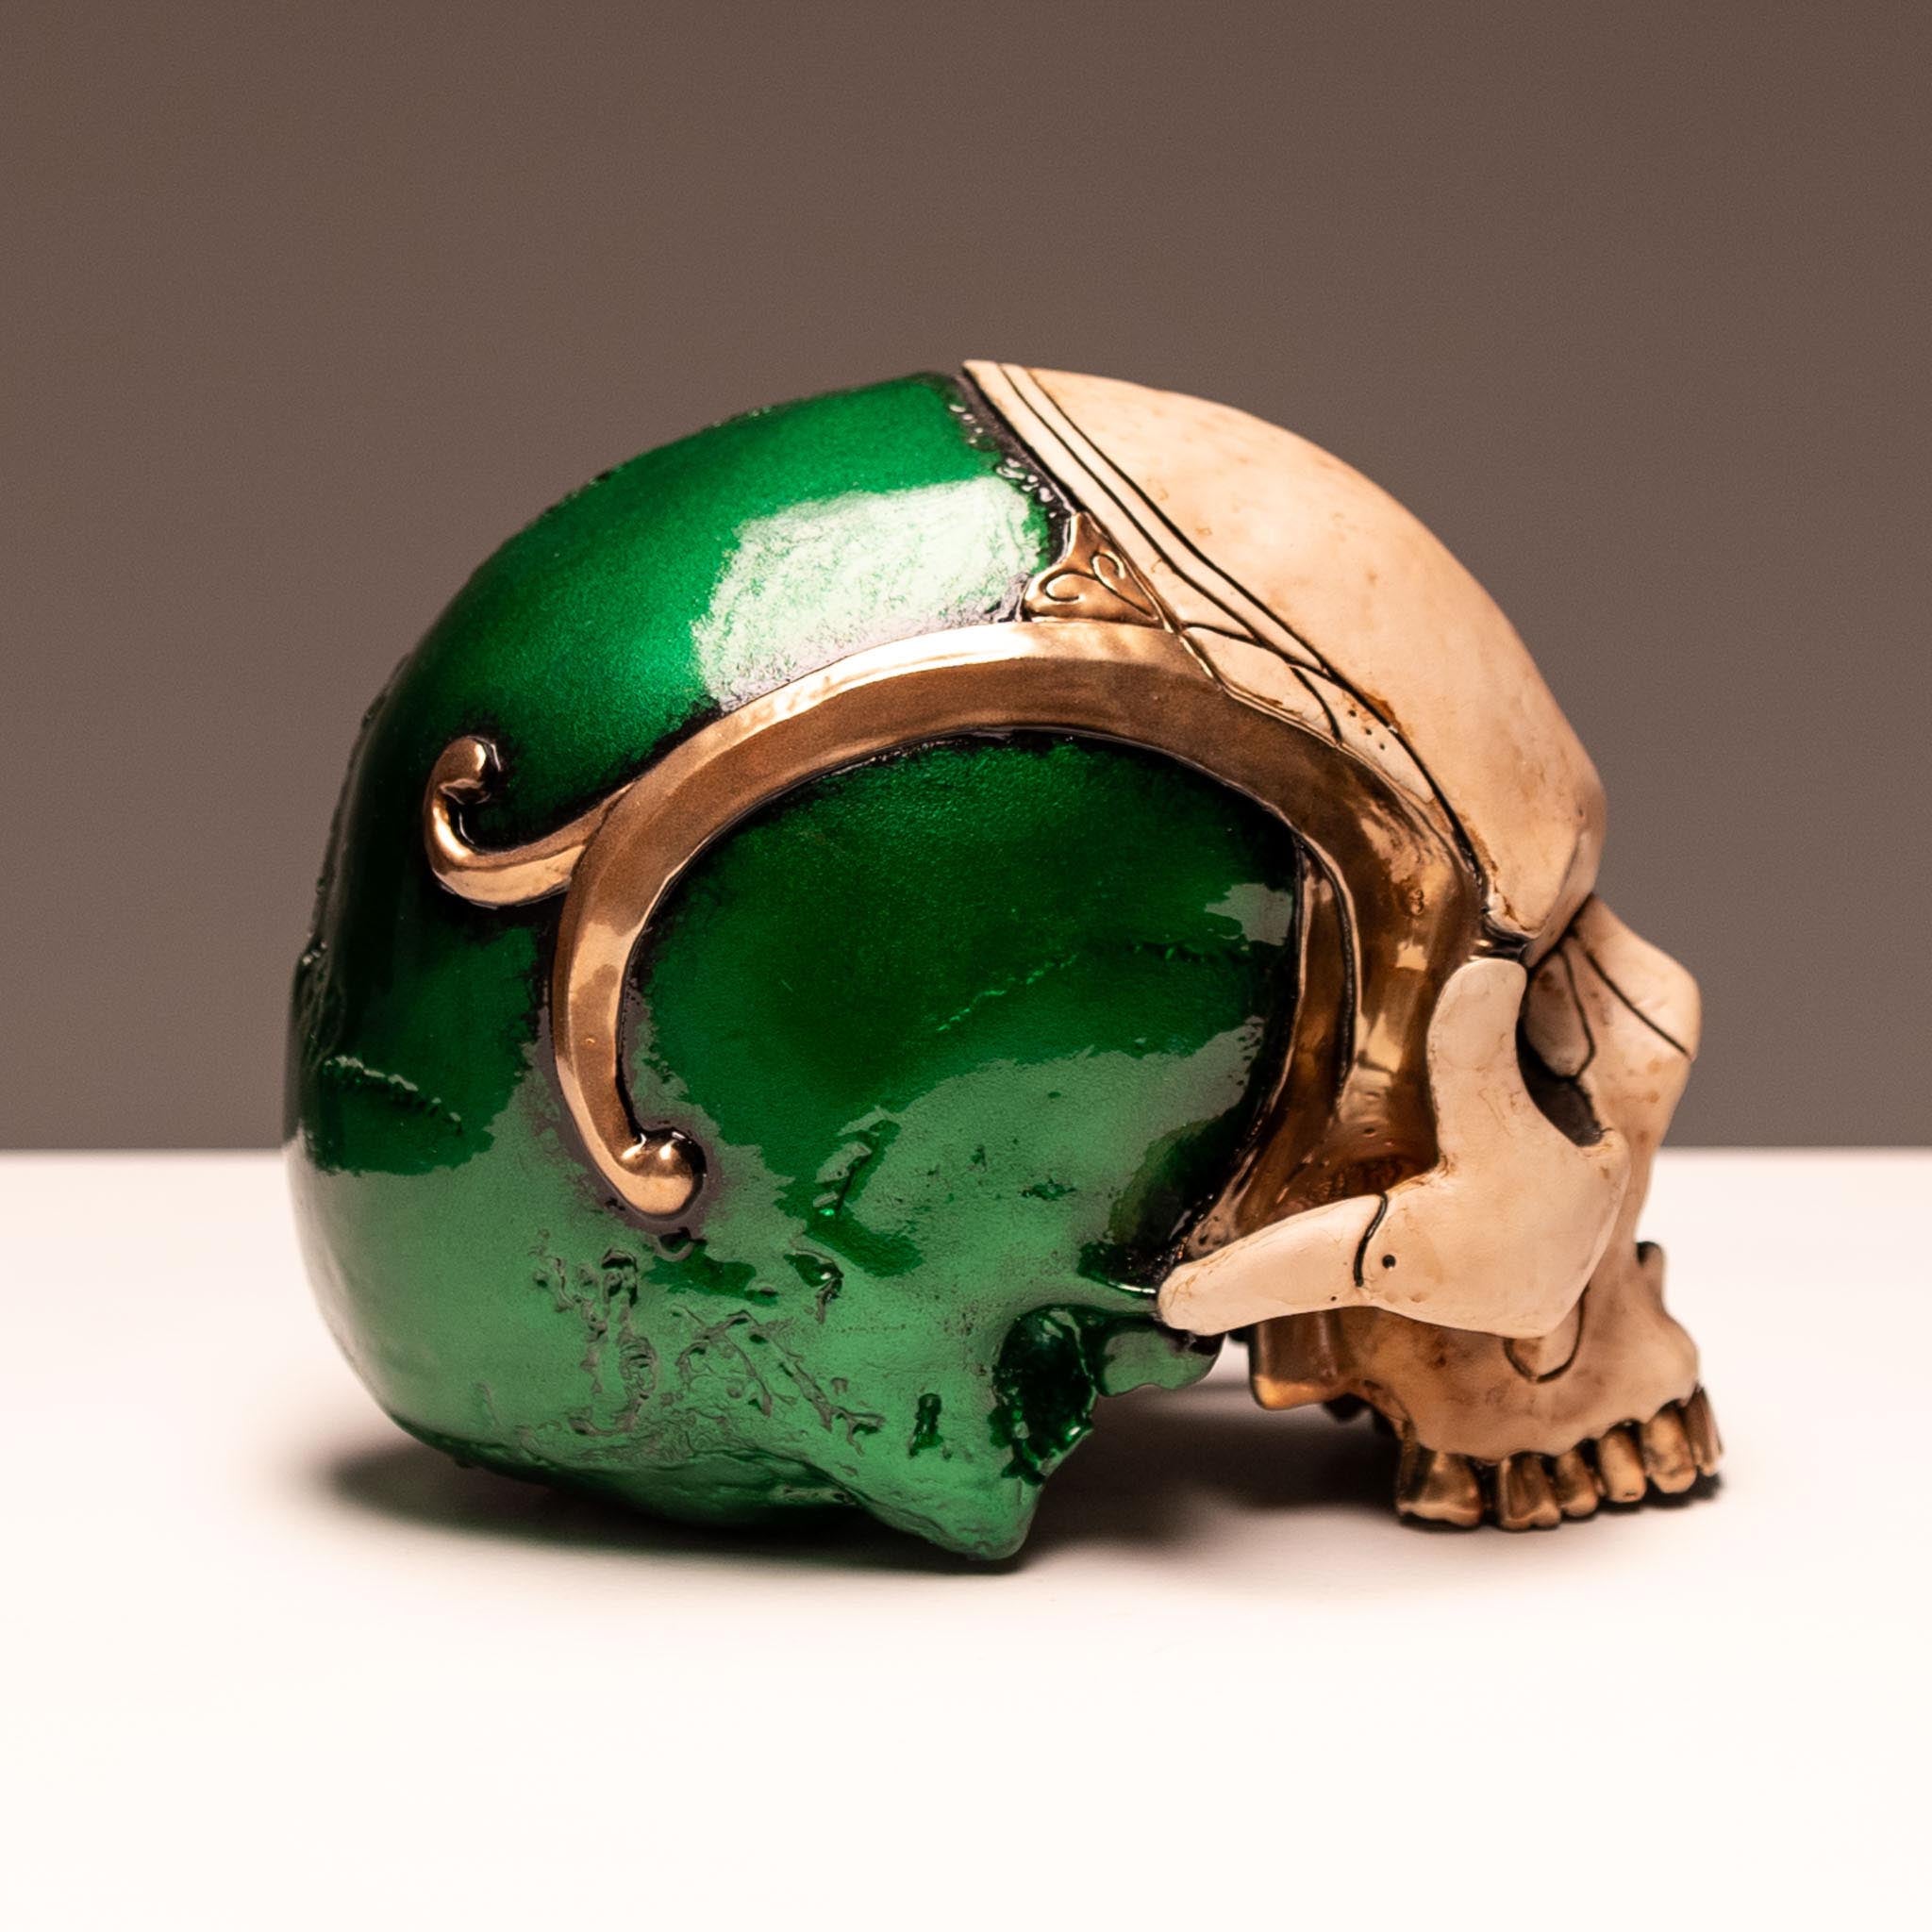 Loki skull